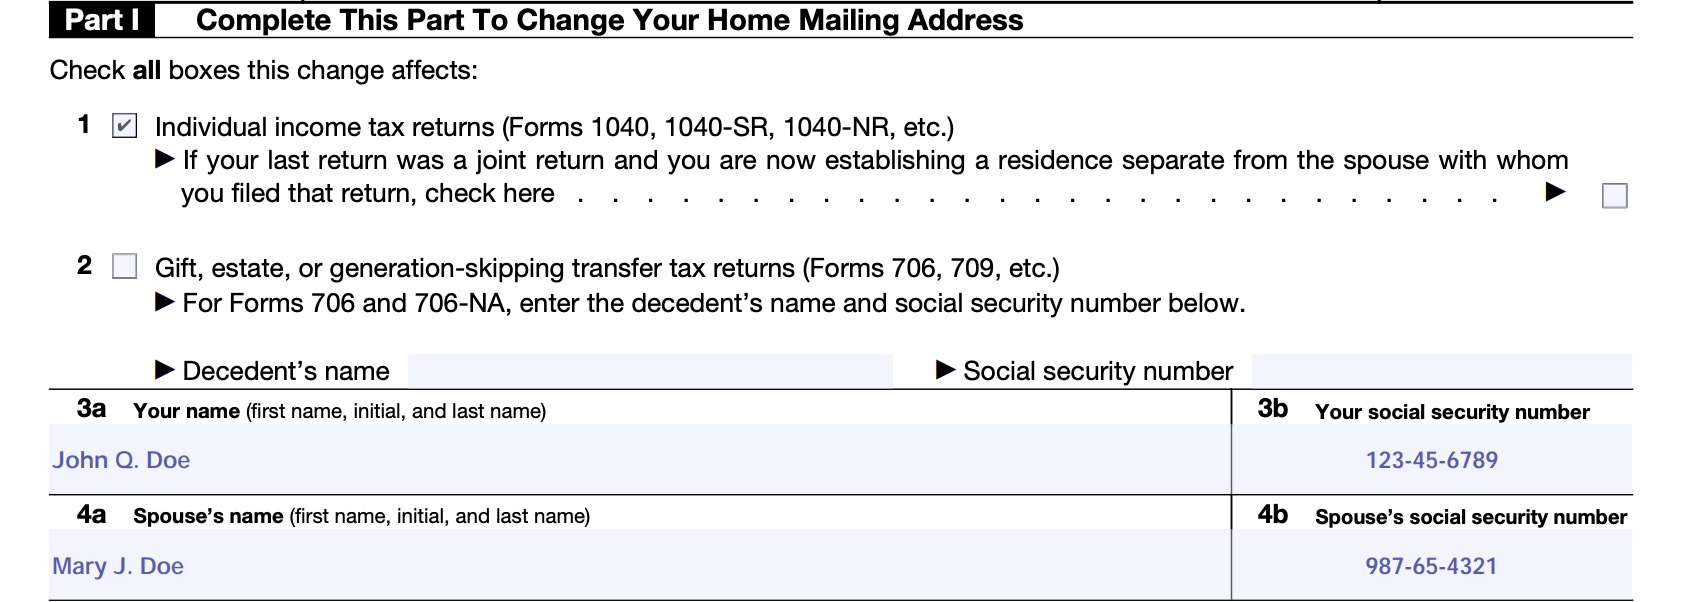 IRS Form 8822, part I, lines 1 through 4b